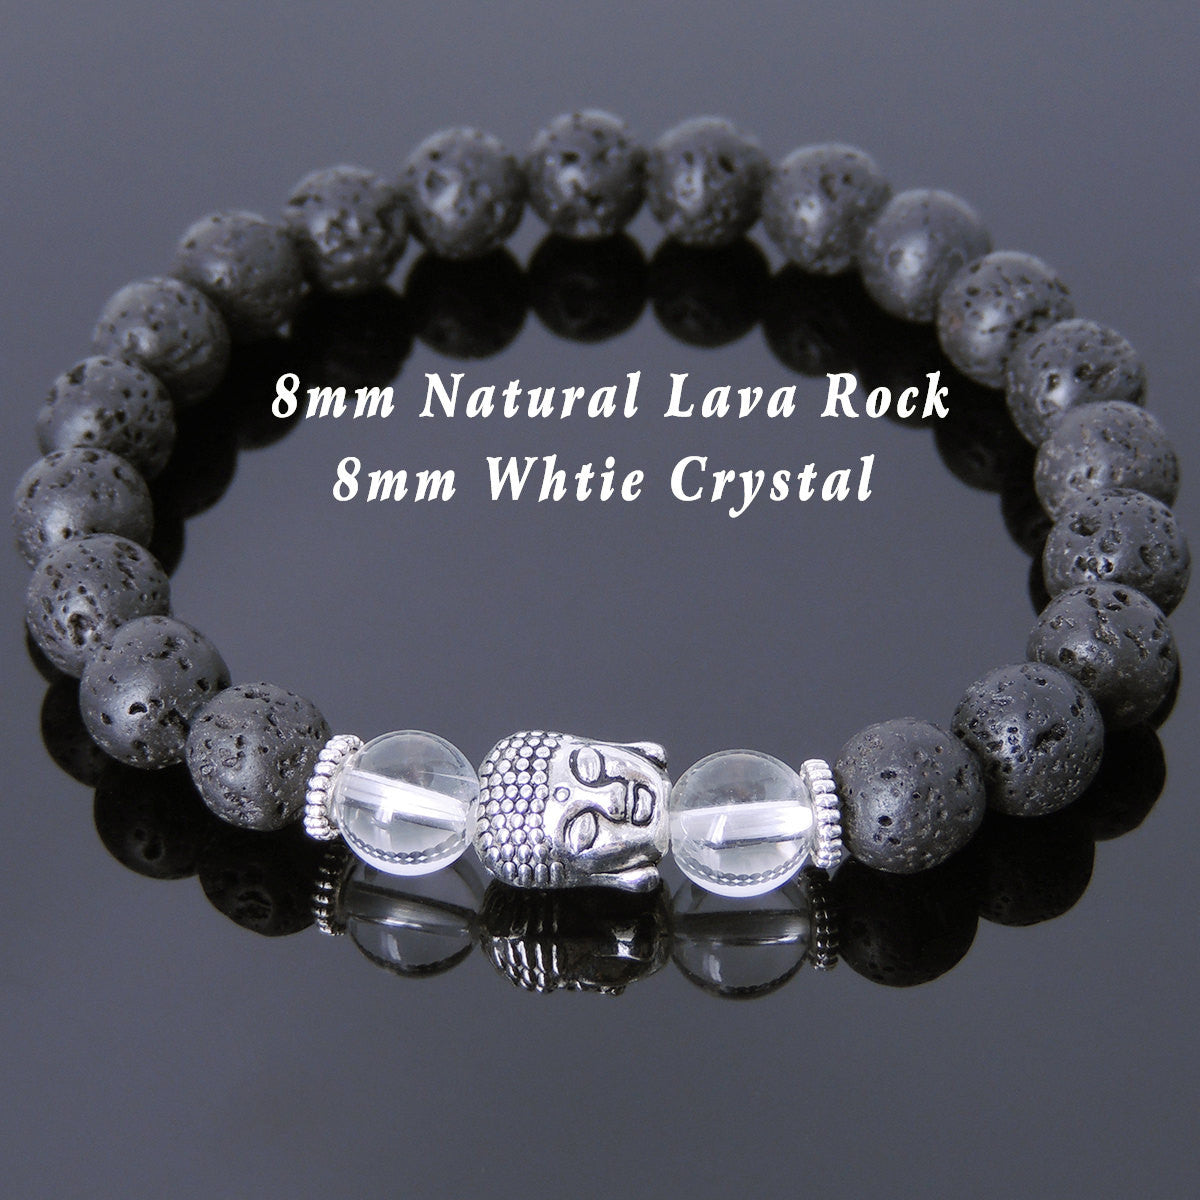 White Crystal Quartz & Lava Rock Healing Gemstone Bracelet with Tibetan Silver Sakyamuni Buddha & Spacers - Handmade by Gem & Silver TSB159